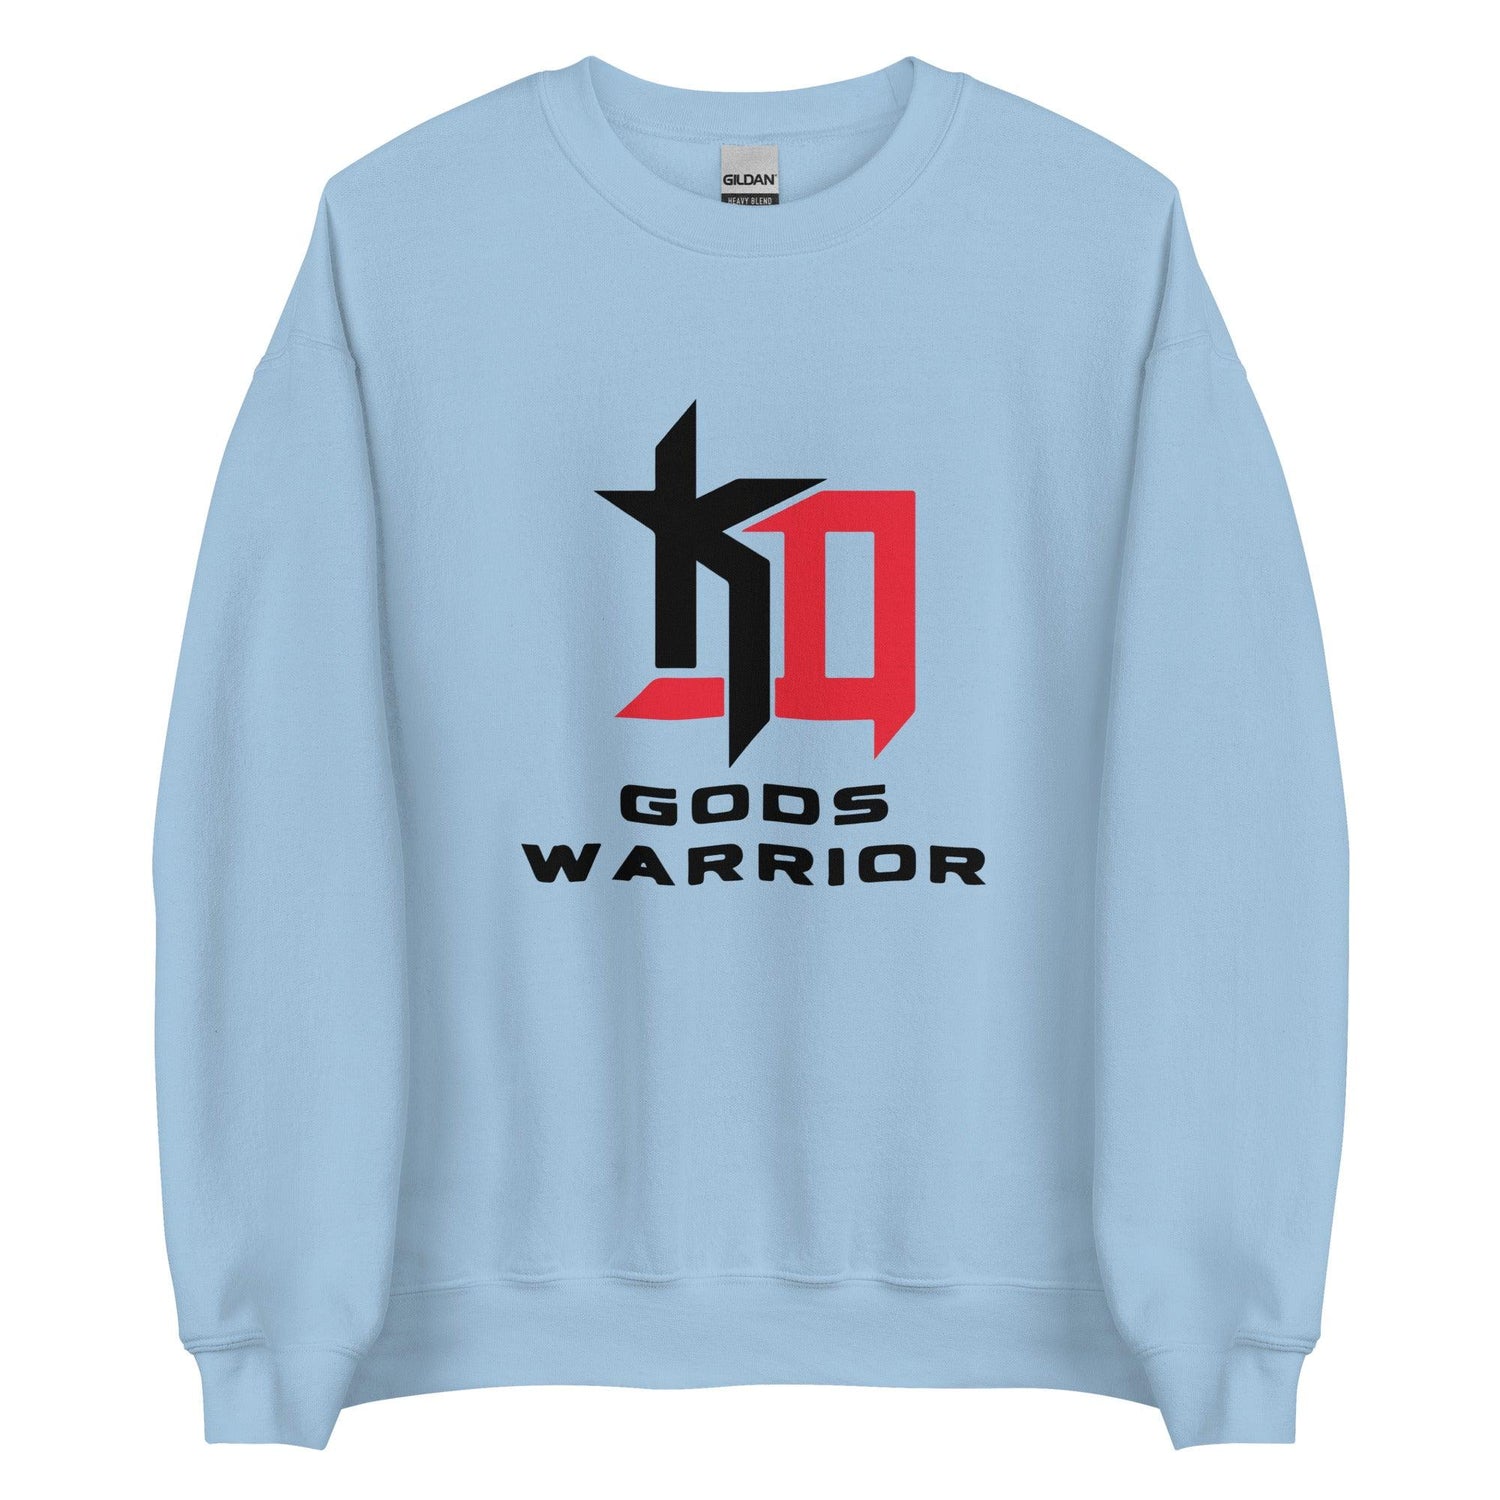 Kailon Davis "God's Warrior" Sweatshirt - Fan Arch